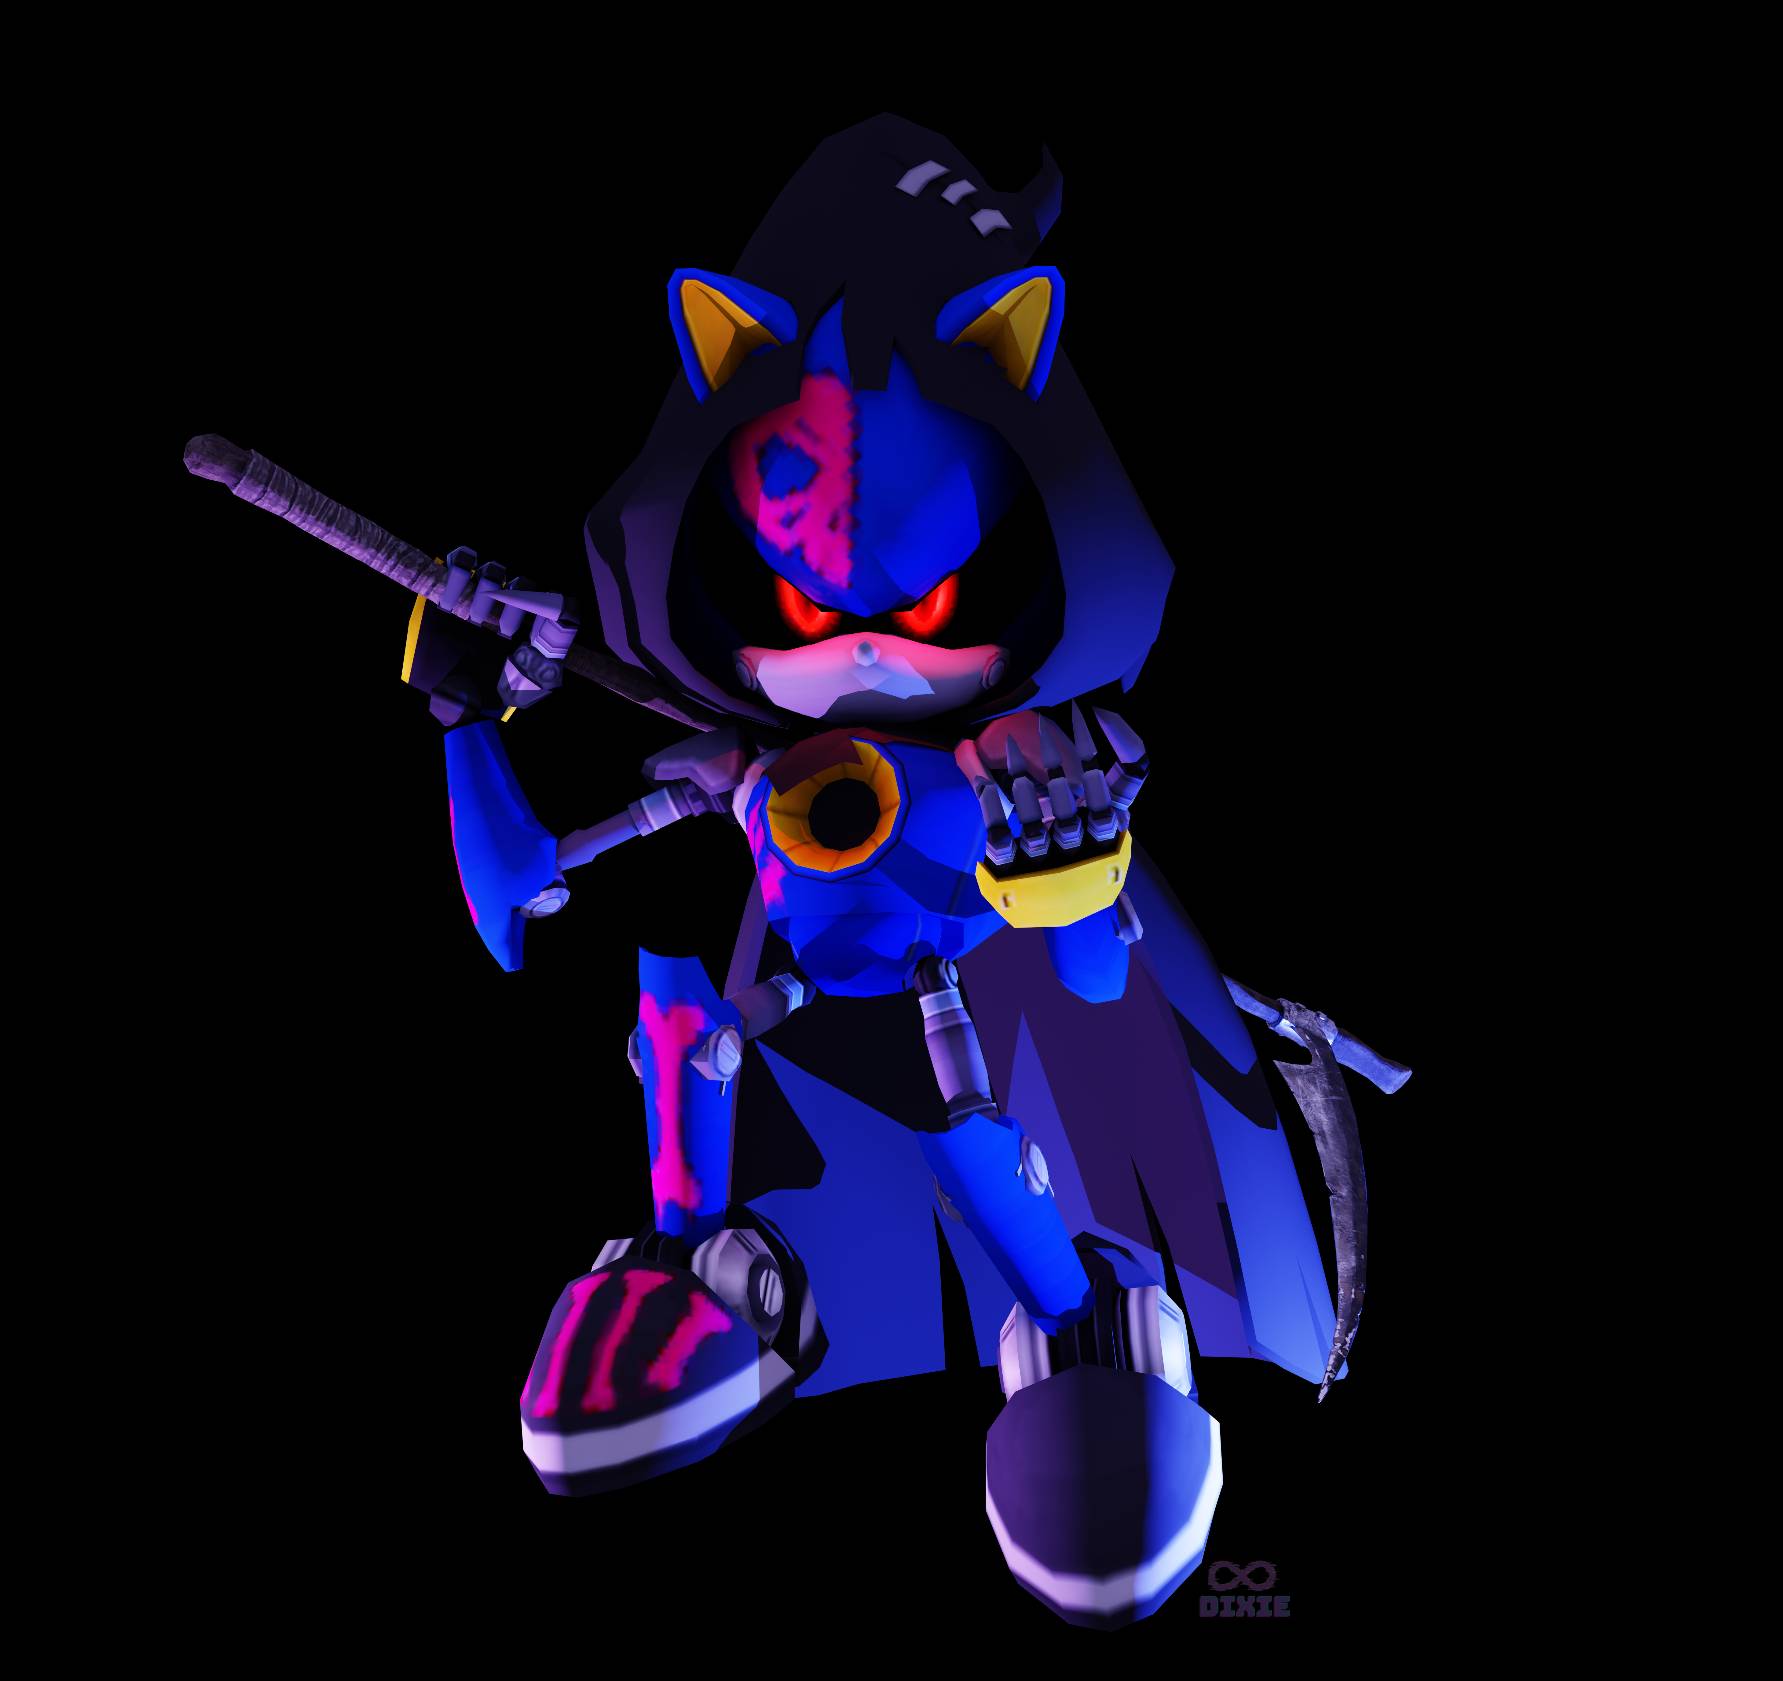 Reaper Metal Sonic (PNG) by PhamtonTv on DeviantArt